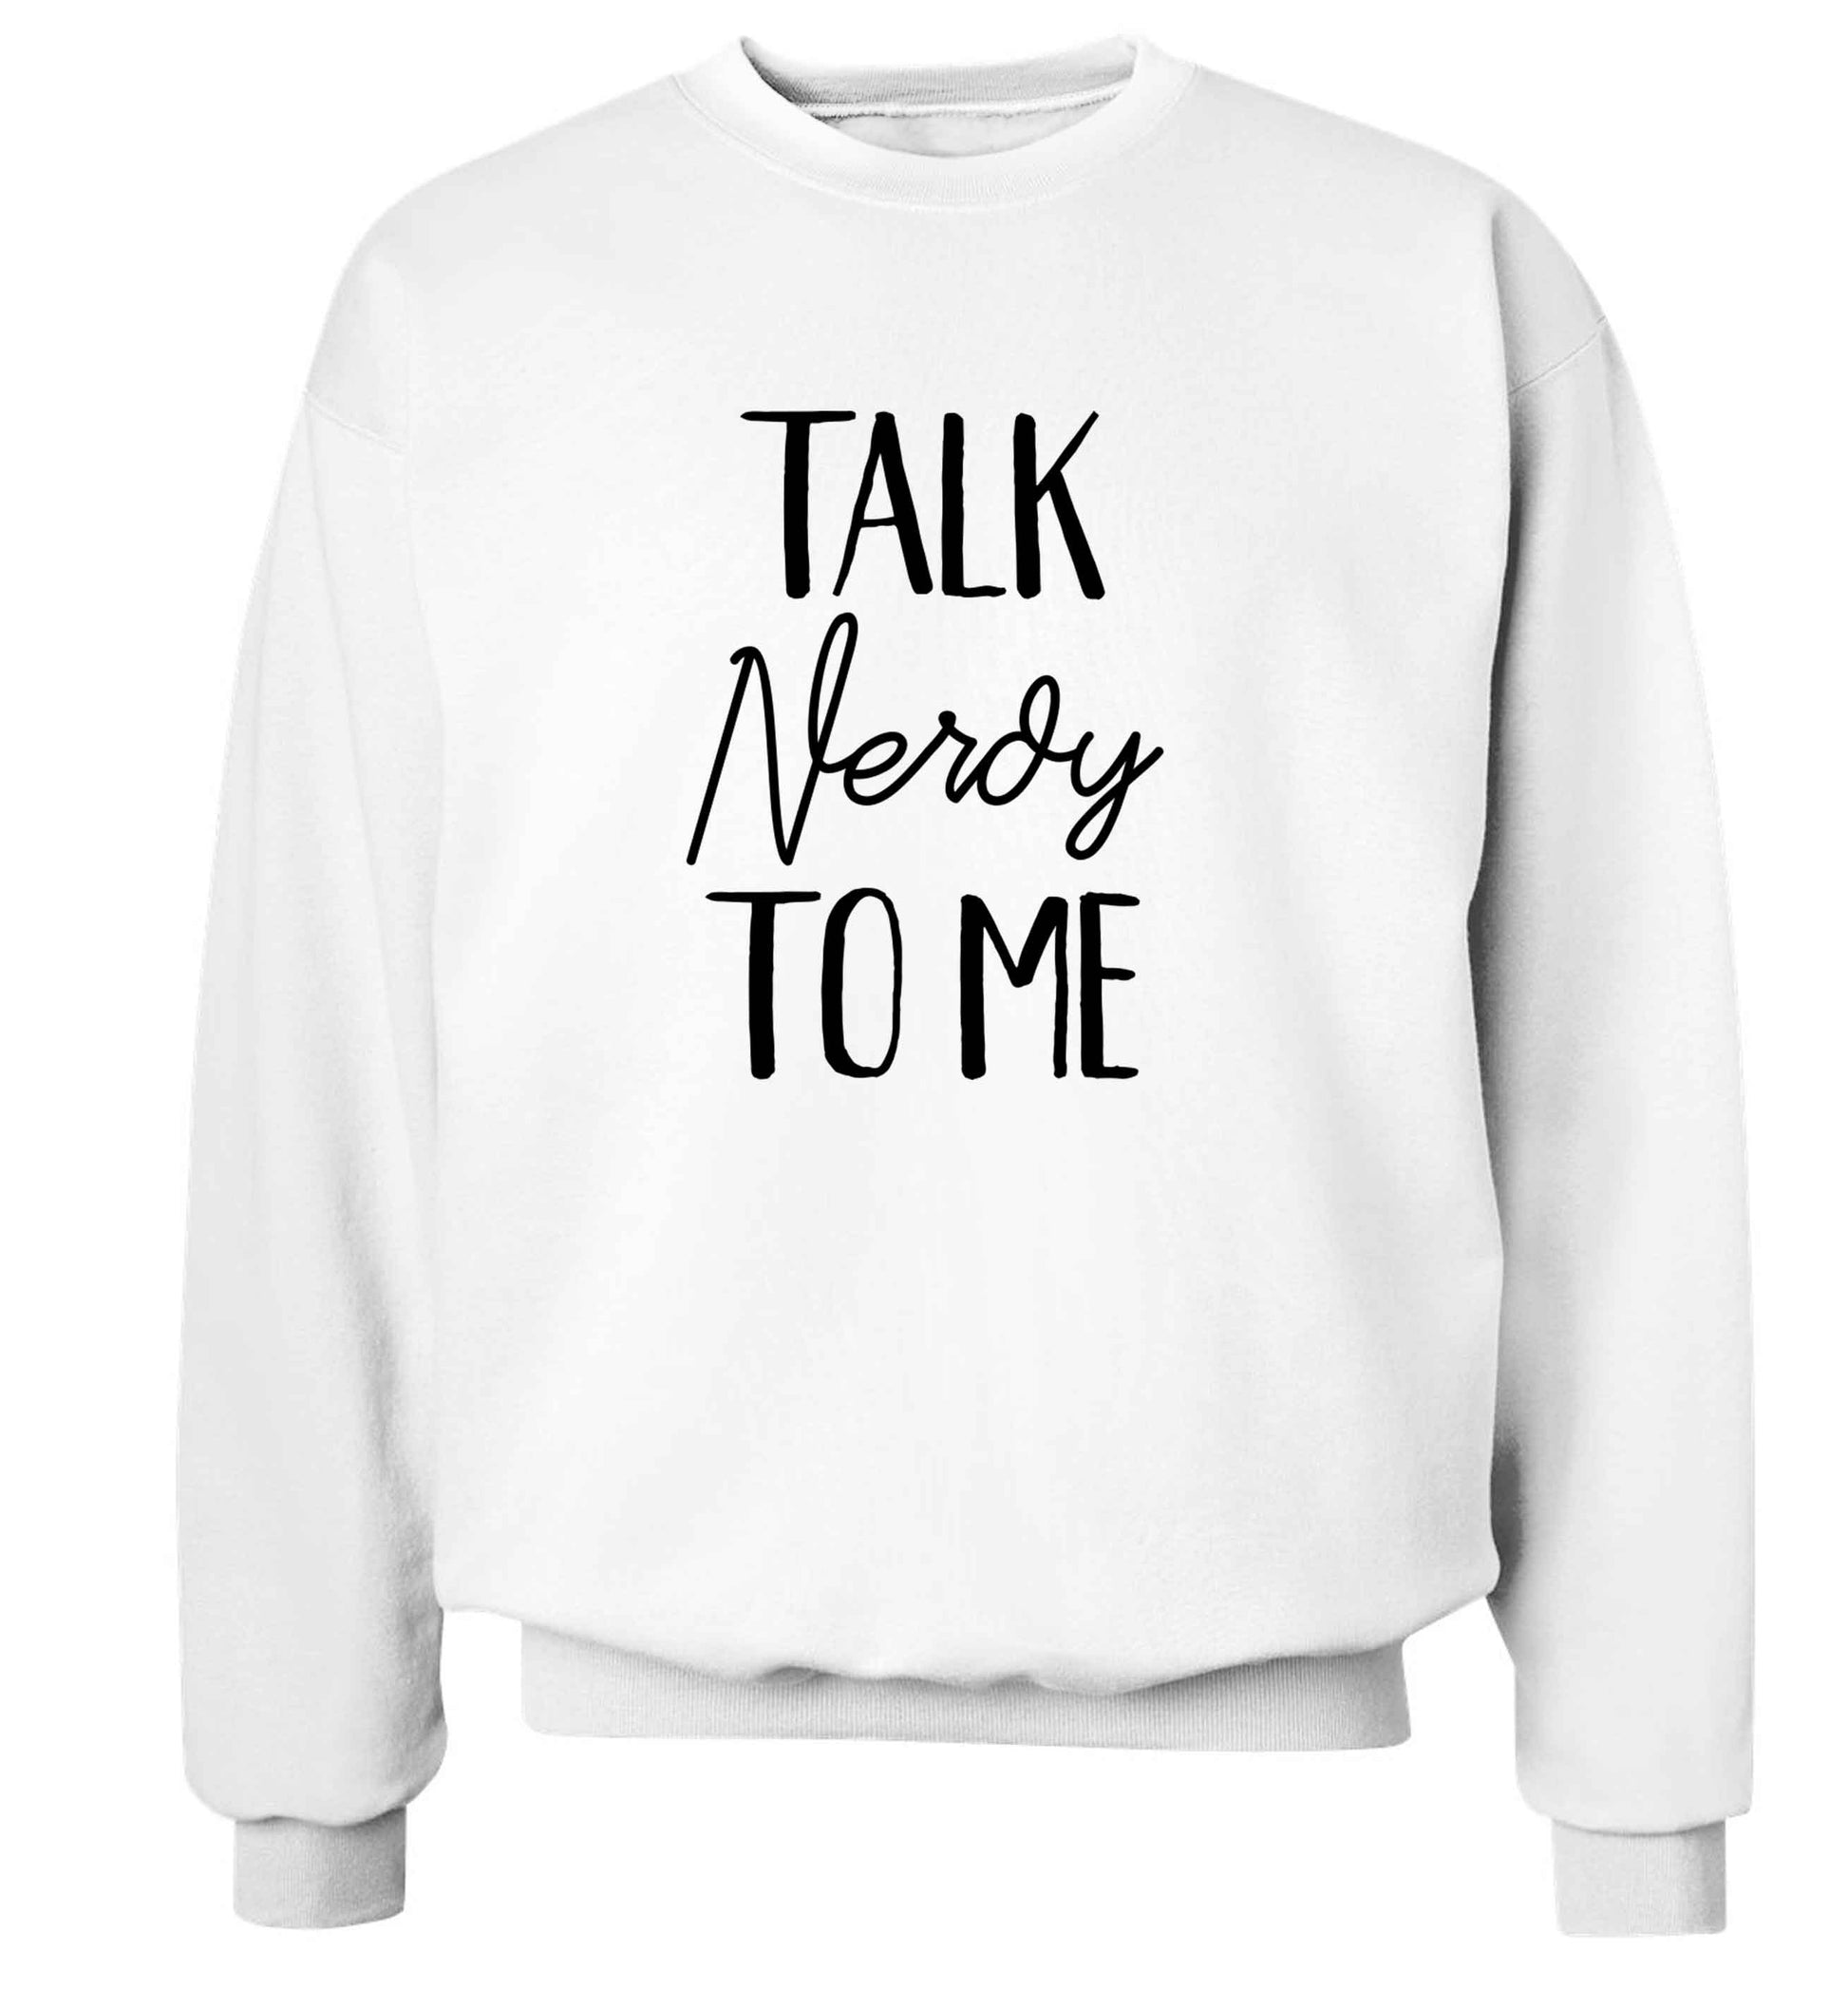 Talk nerdy to me adult's unisex white sweater 2XL